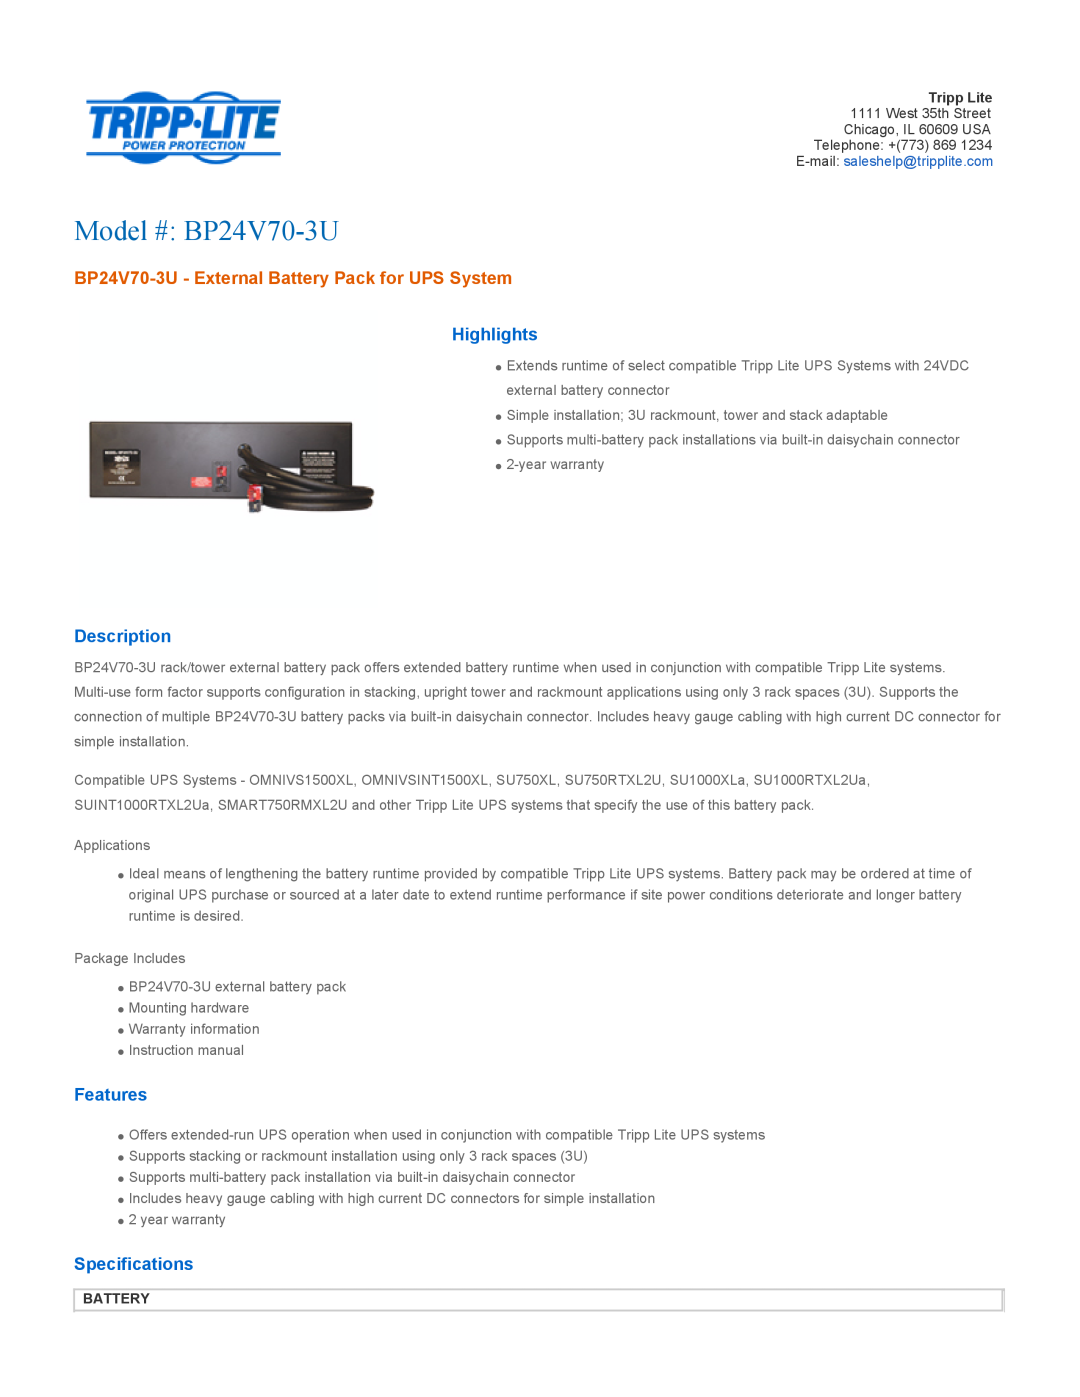 Tripp Lite specifications Highlights, Description, Features, Specifications, Battery, Model # BP24V70-3U 